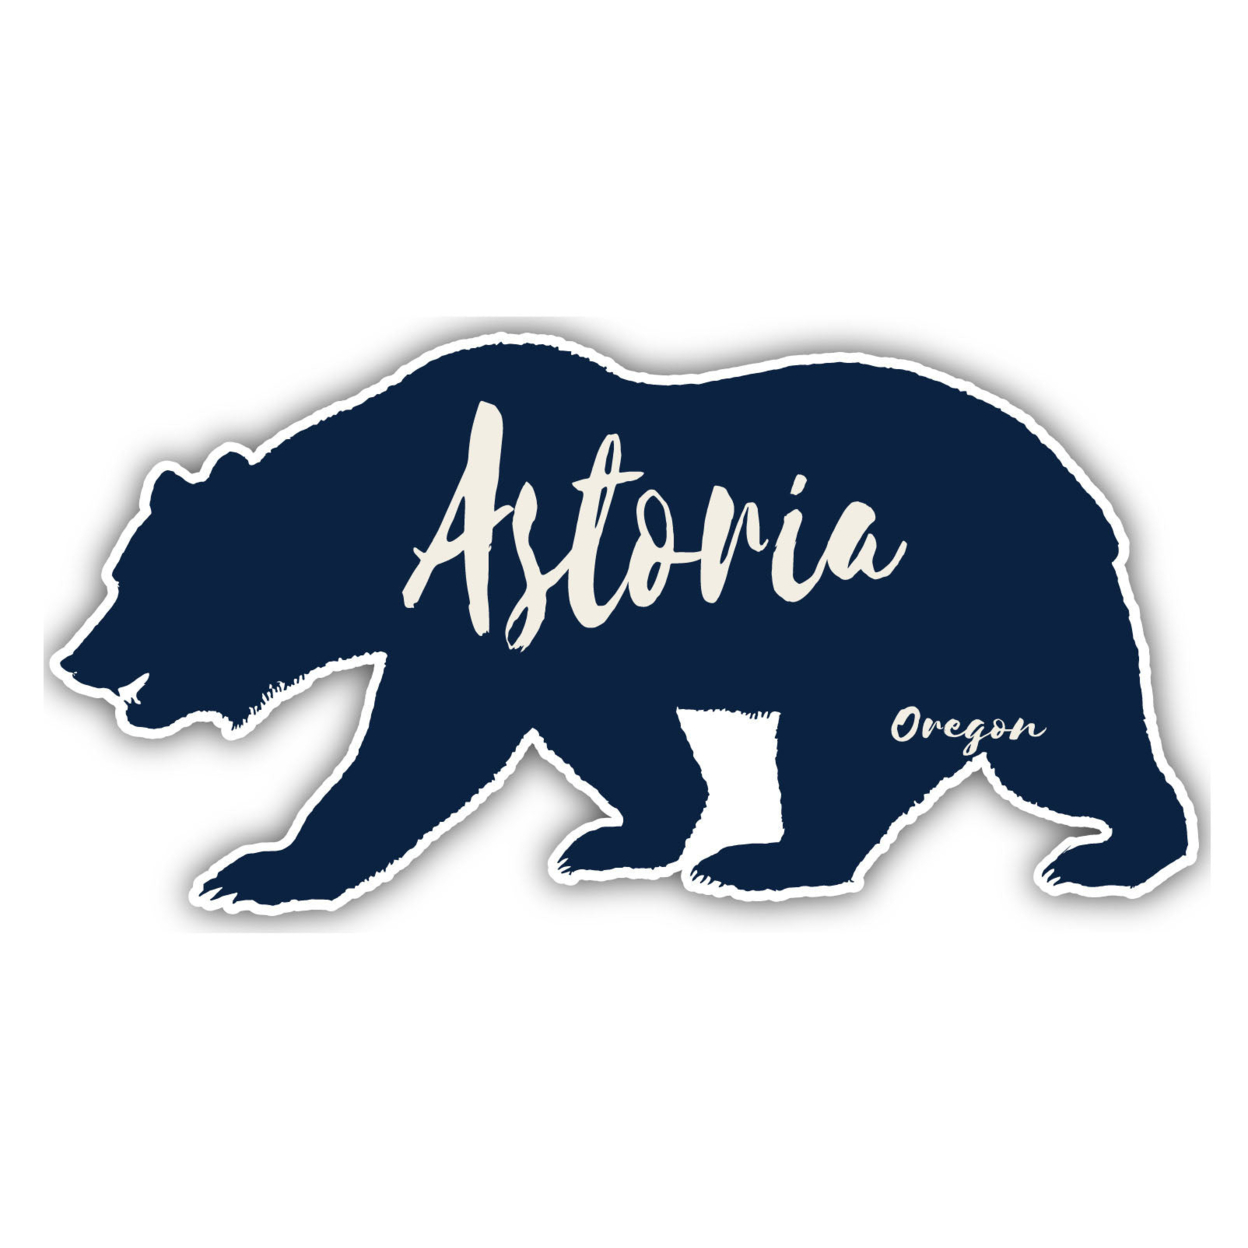 Astoria Oregon Souvenir Decorative Stickers (Choose Theme And Size) - 4-Pack, 2-Inch, Tent